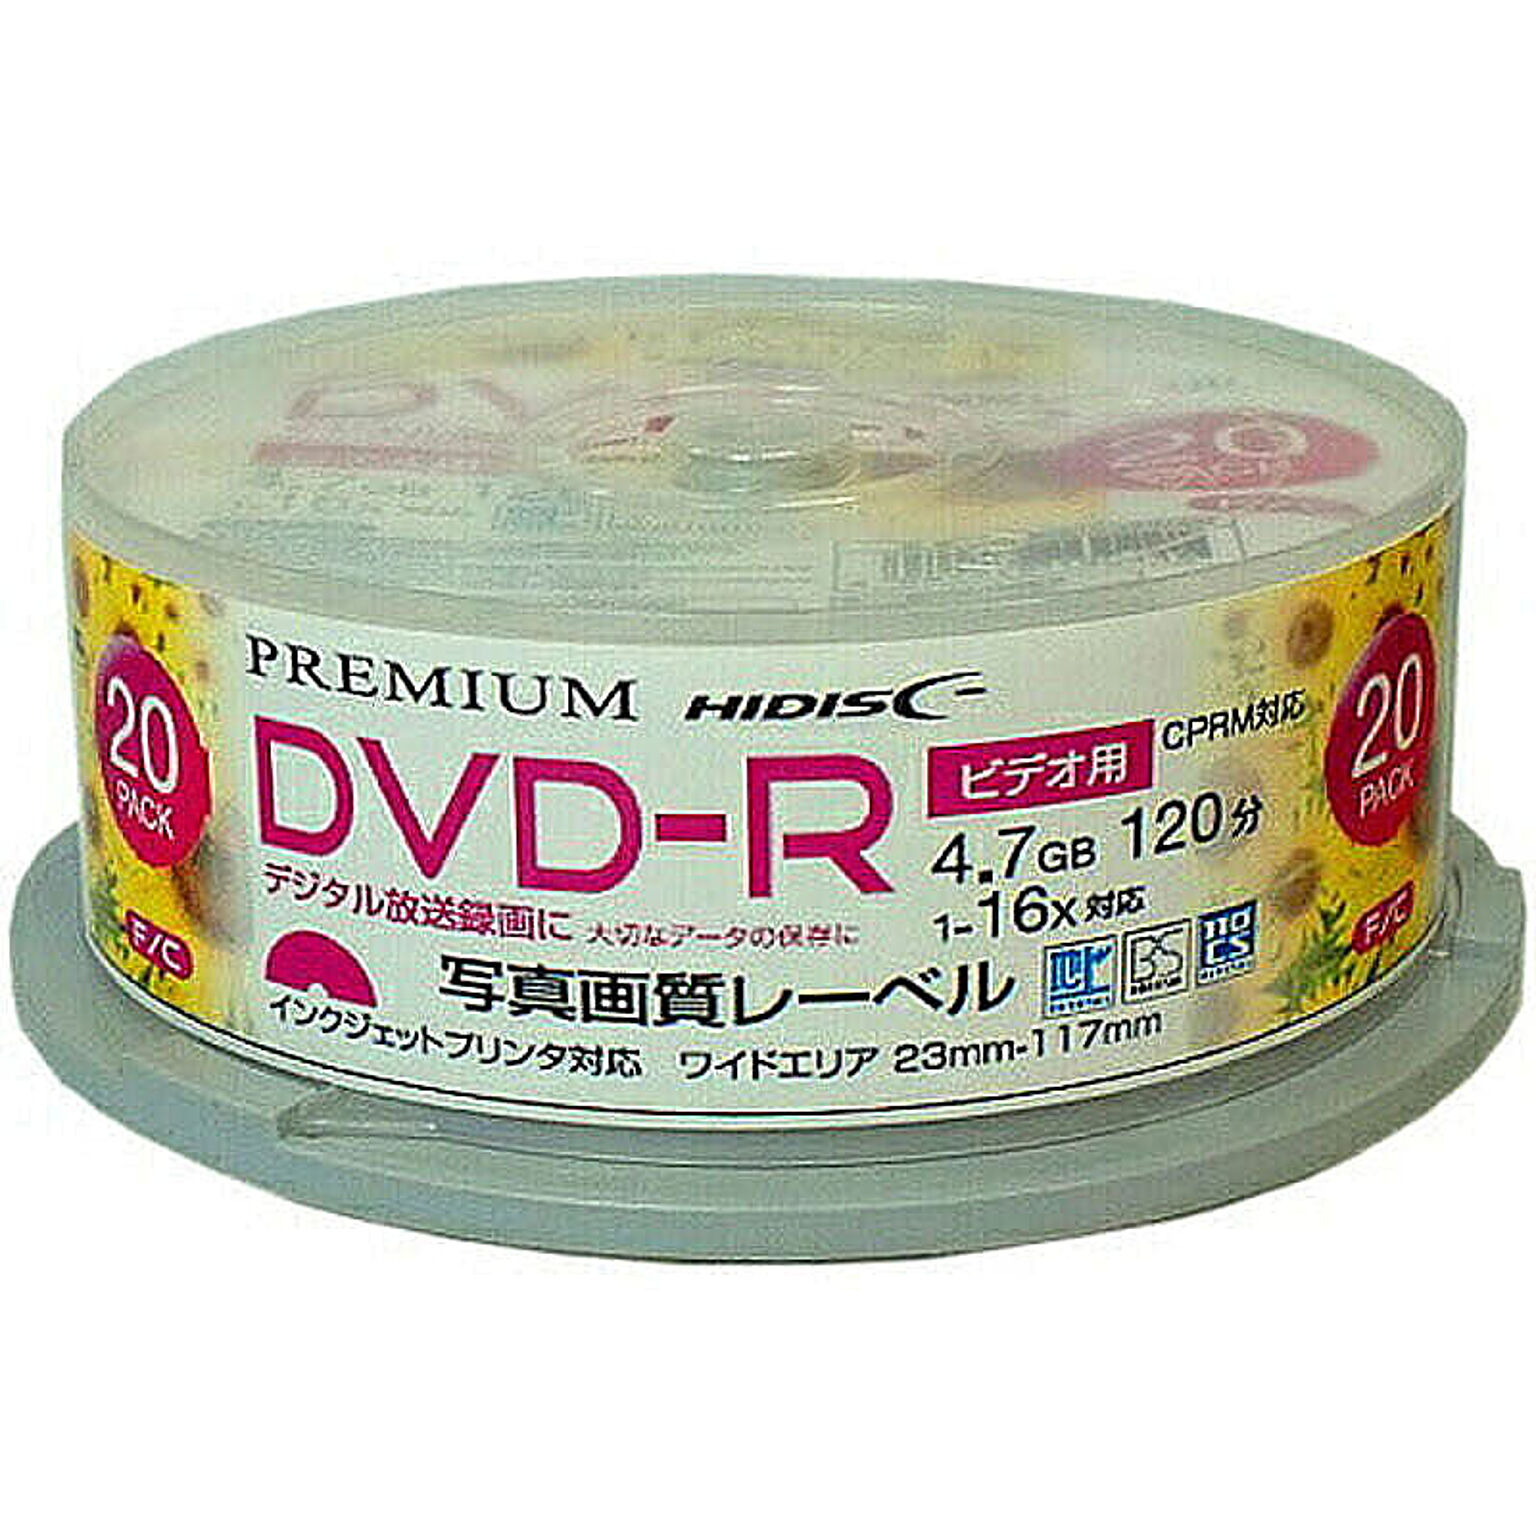 PREMIUM HIDISC 高品質 DVD-R 4.7GB(120分) HDSDR12JCP20SN 管理No. 4984279130445